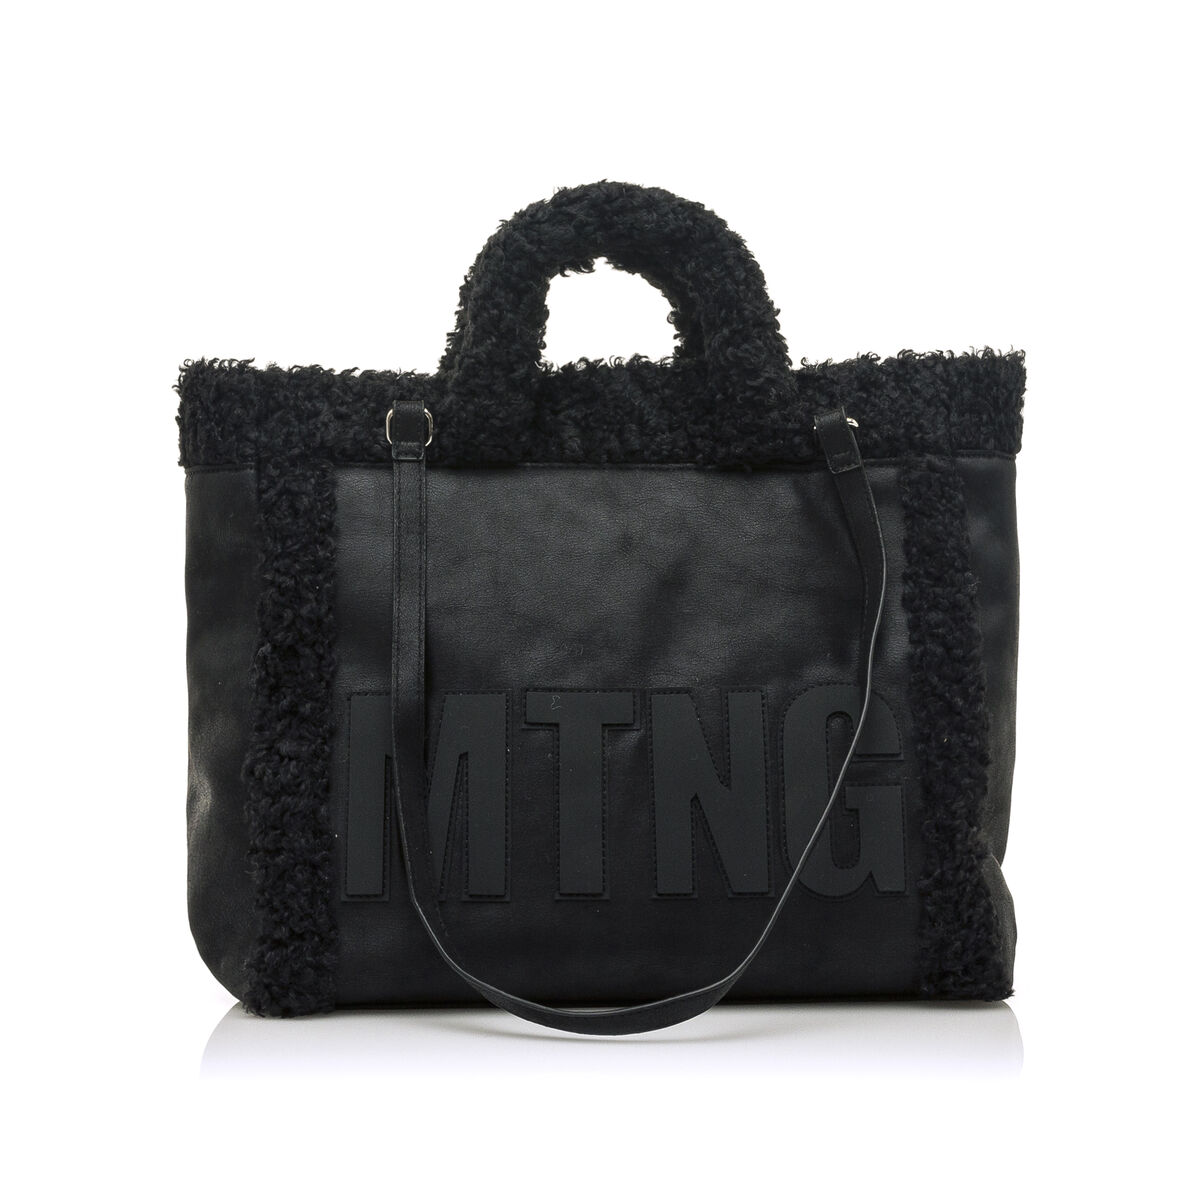 MTNG SHOPPER SHAPE BLACK BAG